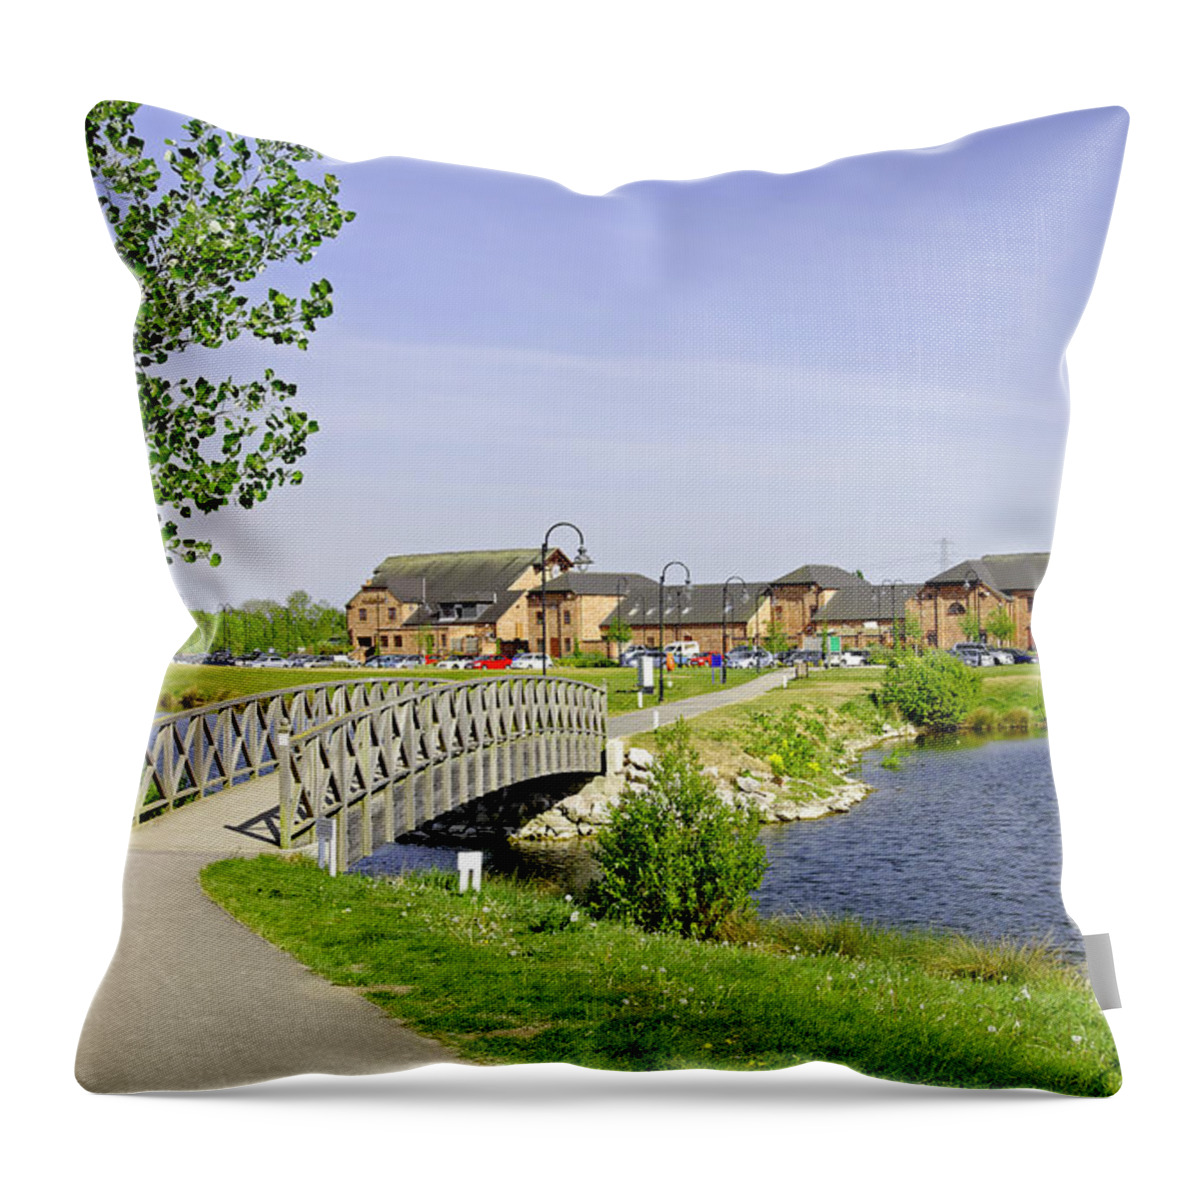 Water Throw Pillow featuring the photograph Foot-bridge and Lake - Barton Marina by Rod Johnson